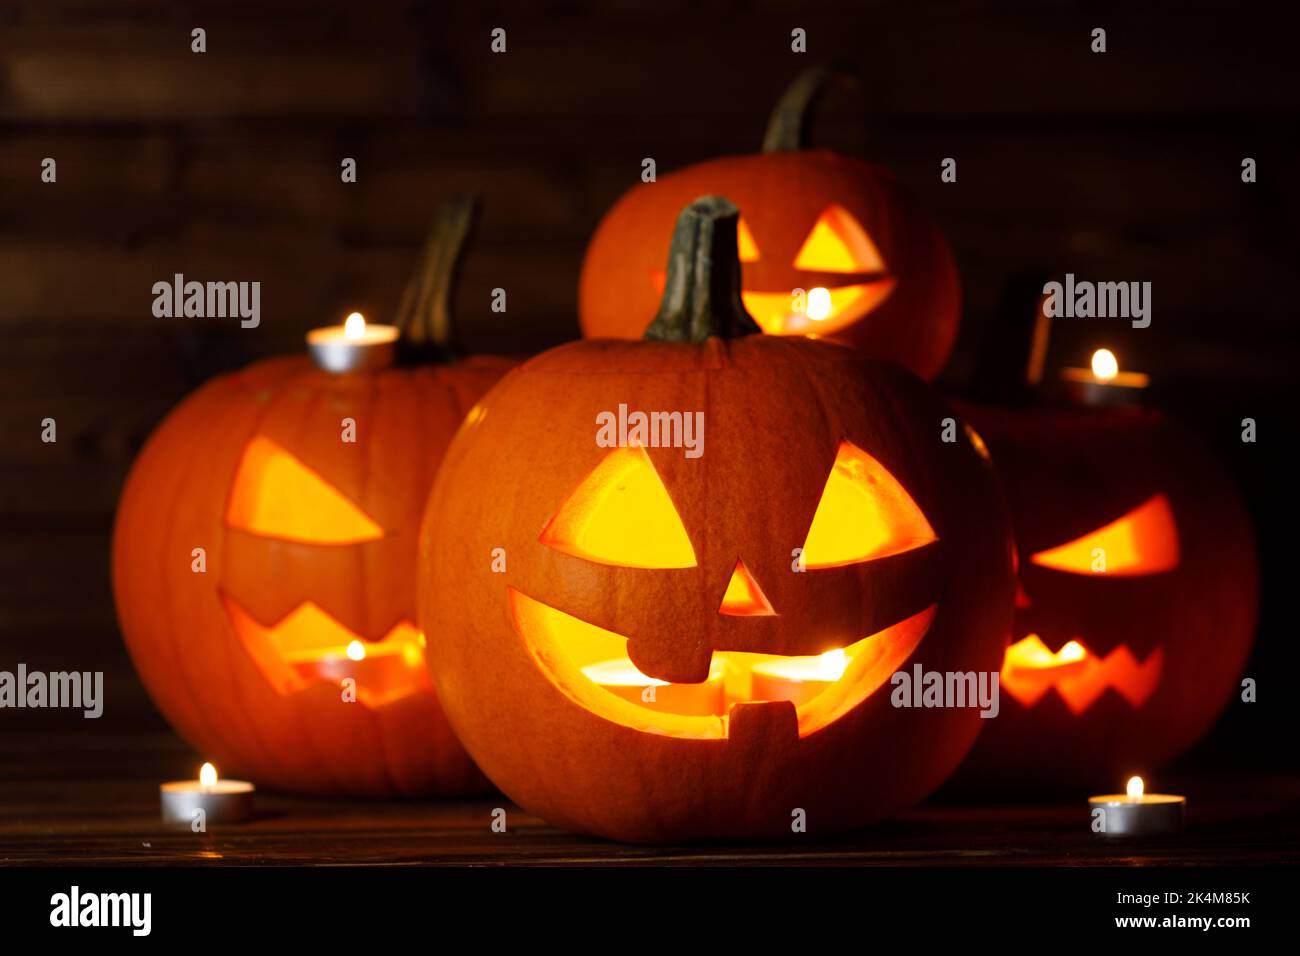 Halloween Jack O Lantern pumpkins and burning candles traditional decoration Stock Photo